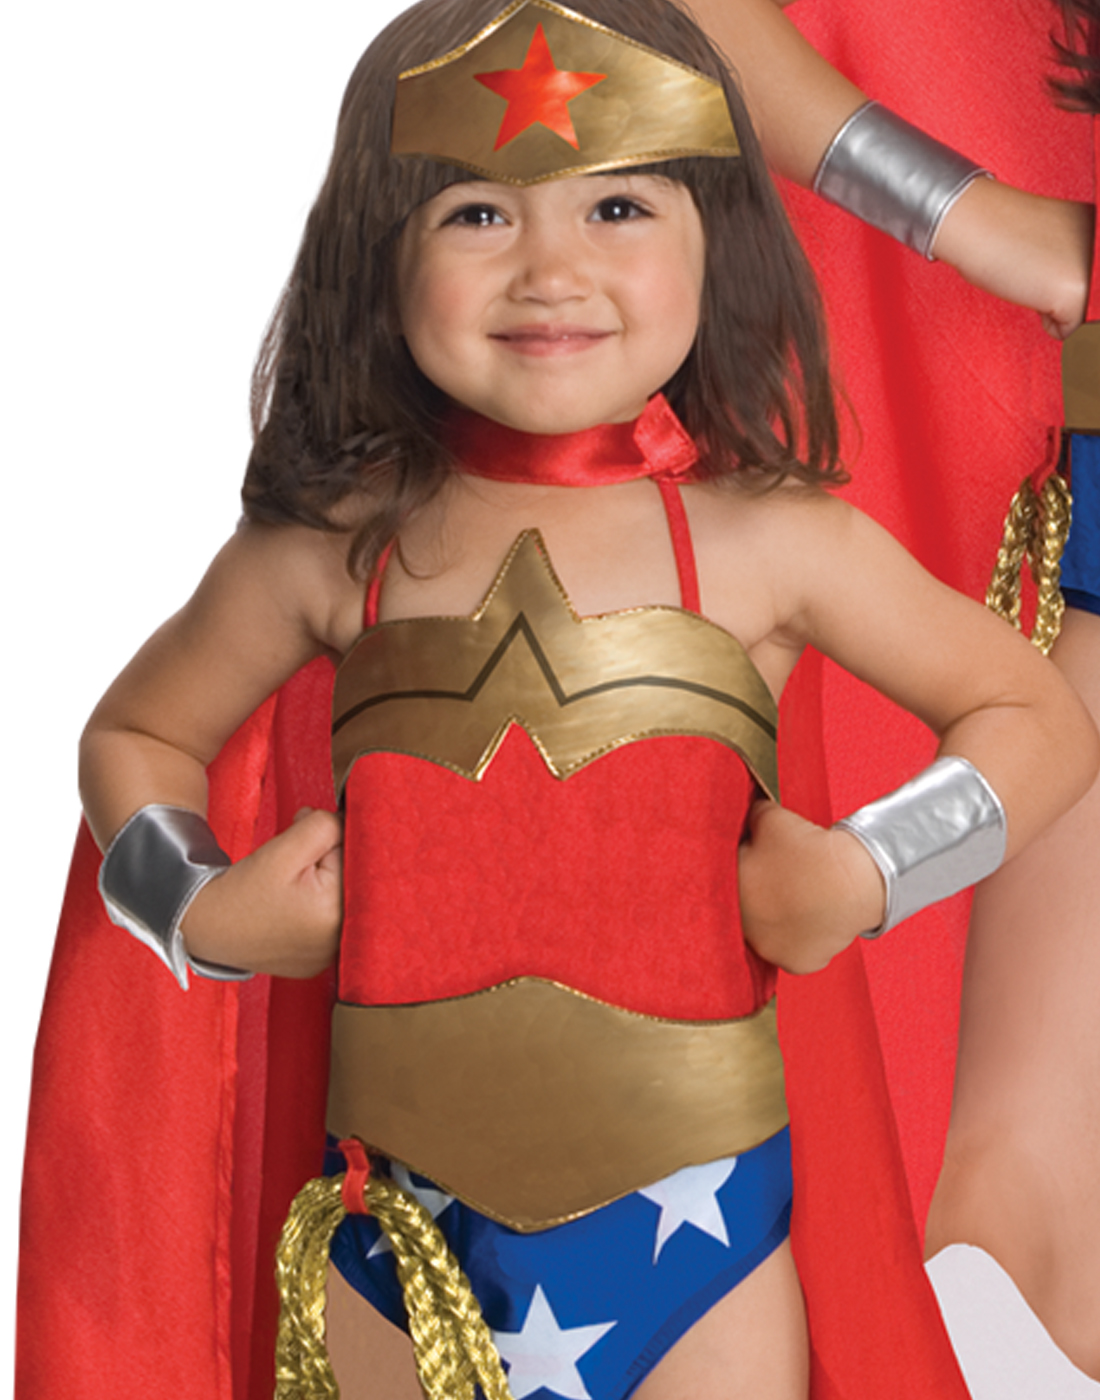 Justice League DC Comics Wonder Woman Child Halloween Costume - image 3 of 4